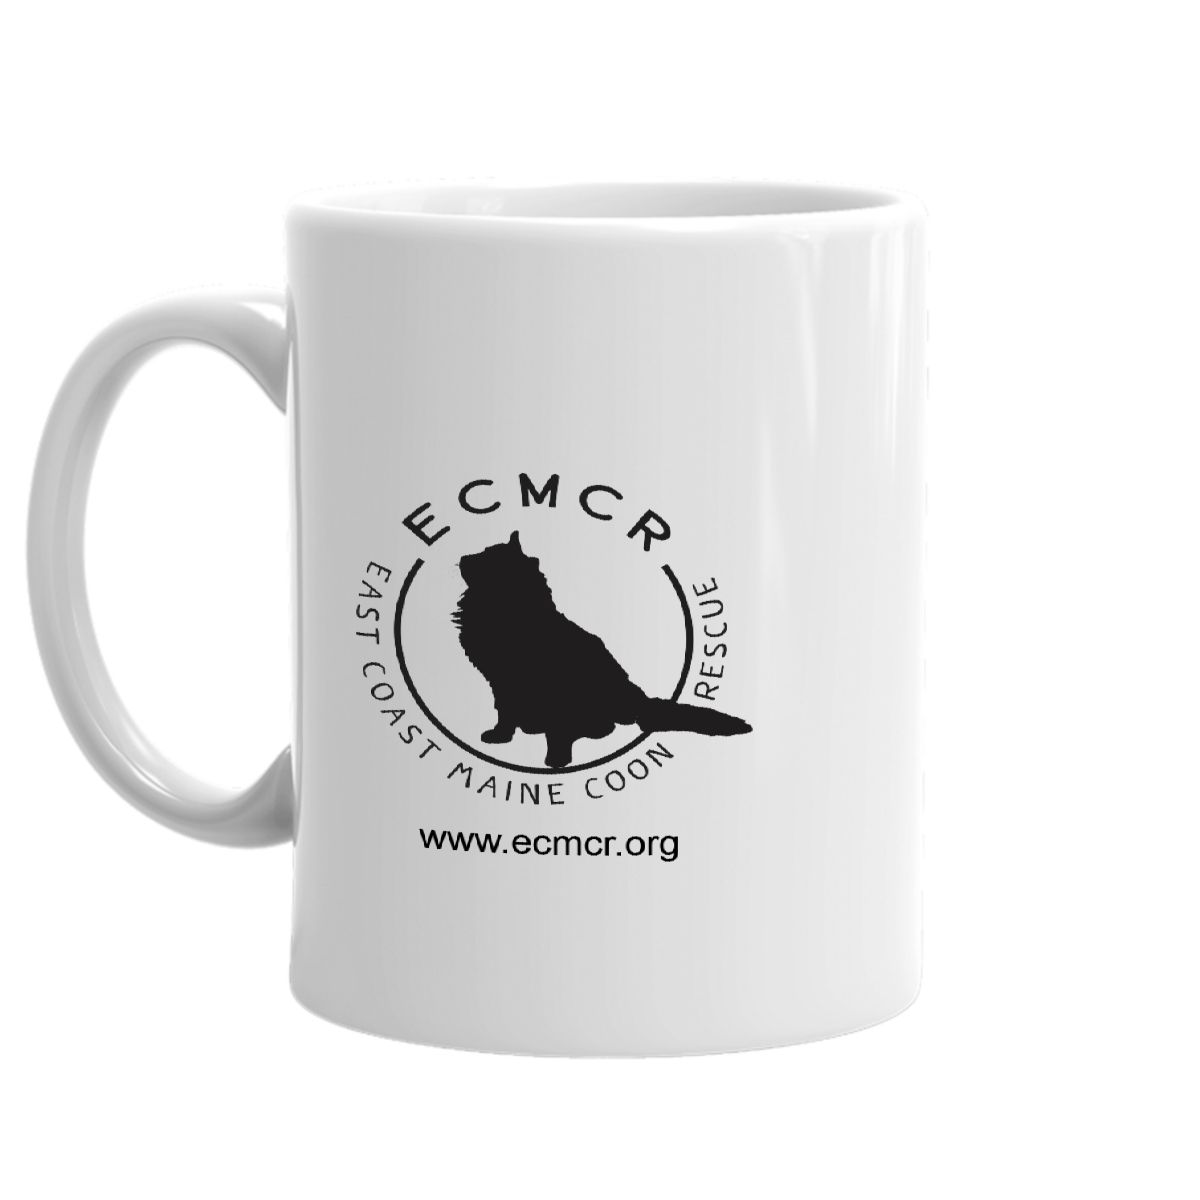 ECMCR Mug